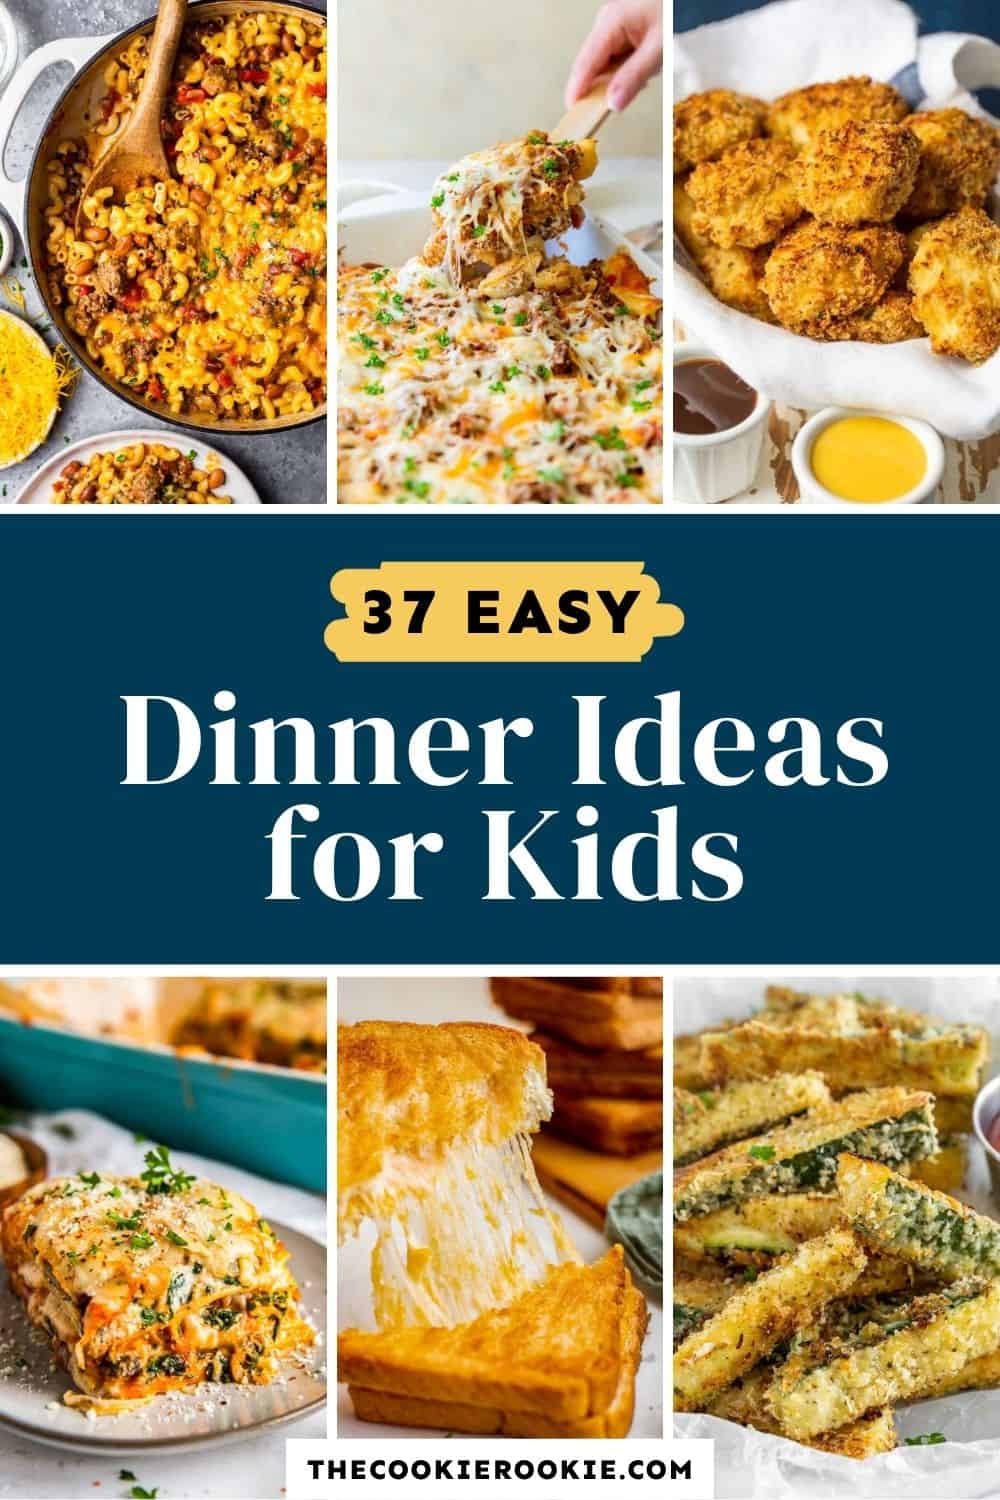 https://www.thecookierookie.com/wp-content/uploads/2022/06/dinner-ideas-kids.jpg